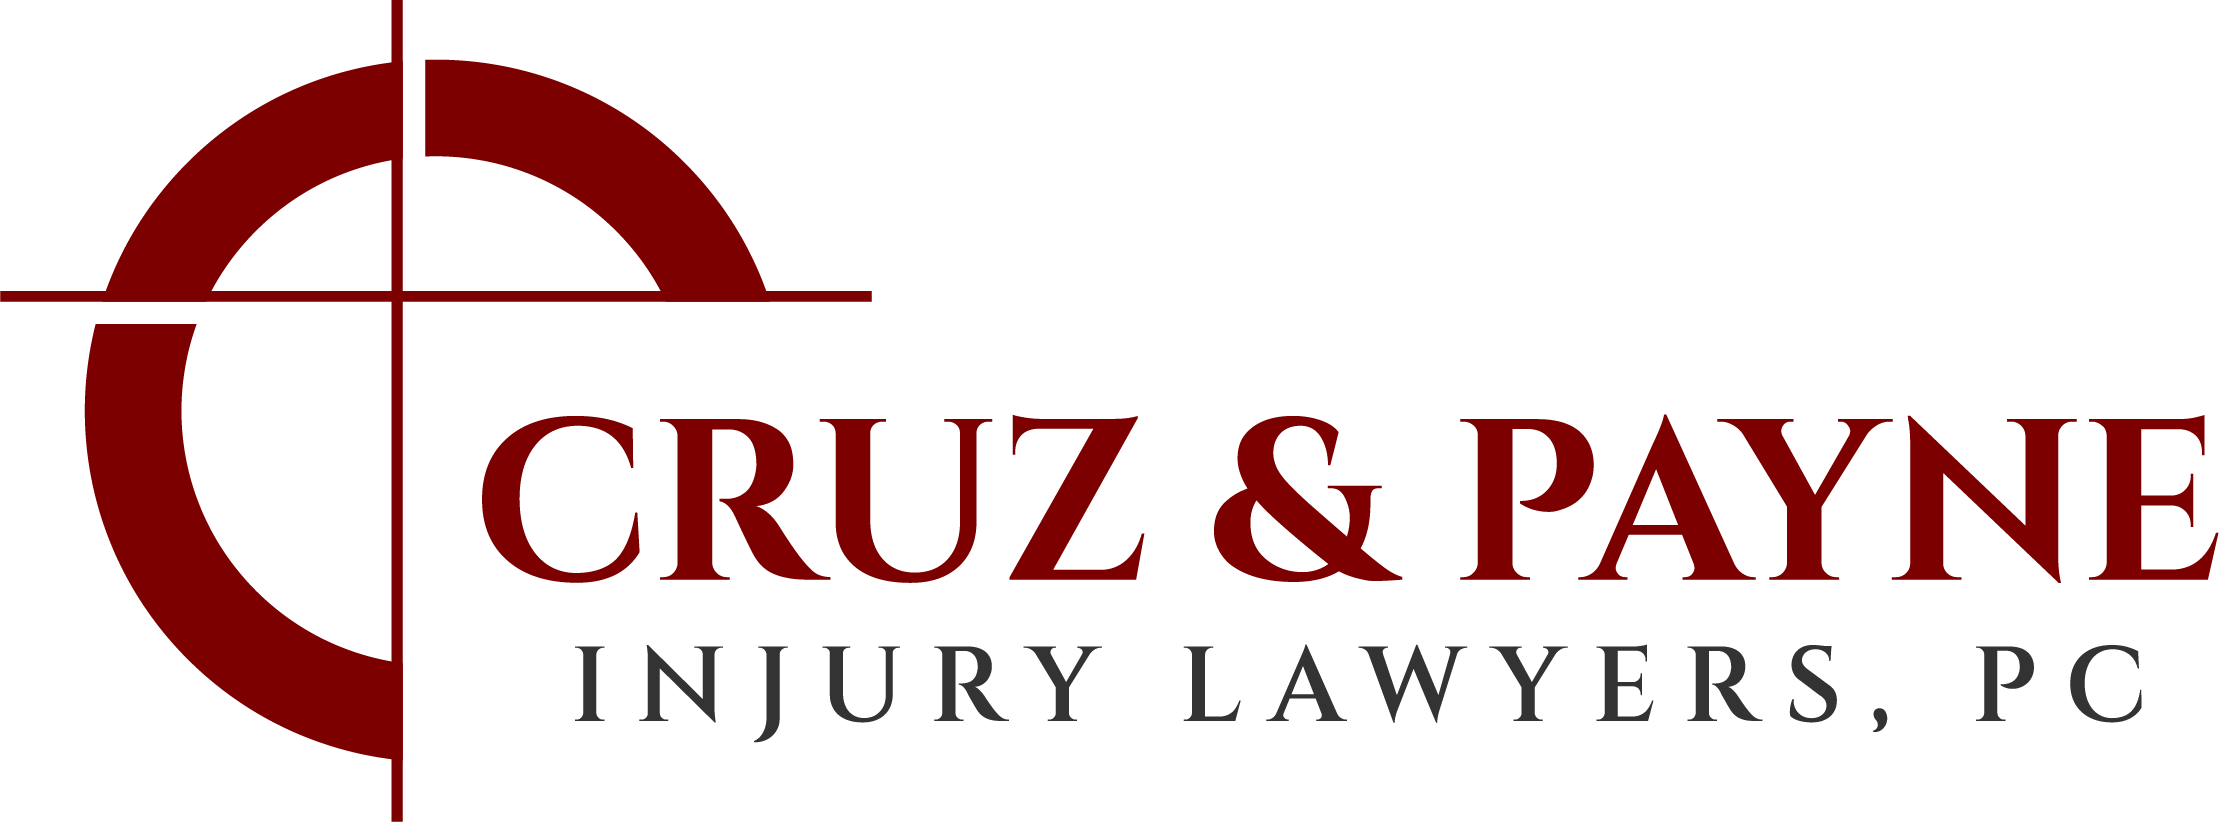 Contact – Cruz & Payne Injury Lawyers P.C.